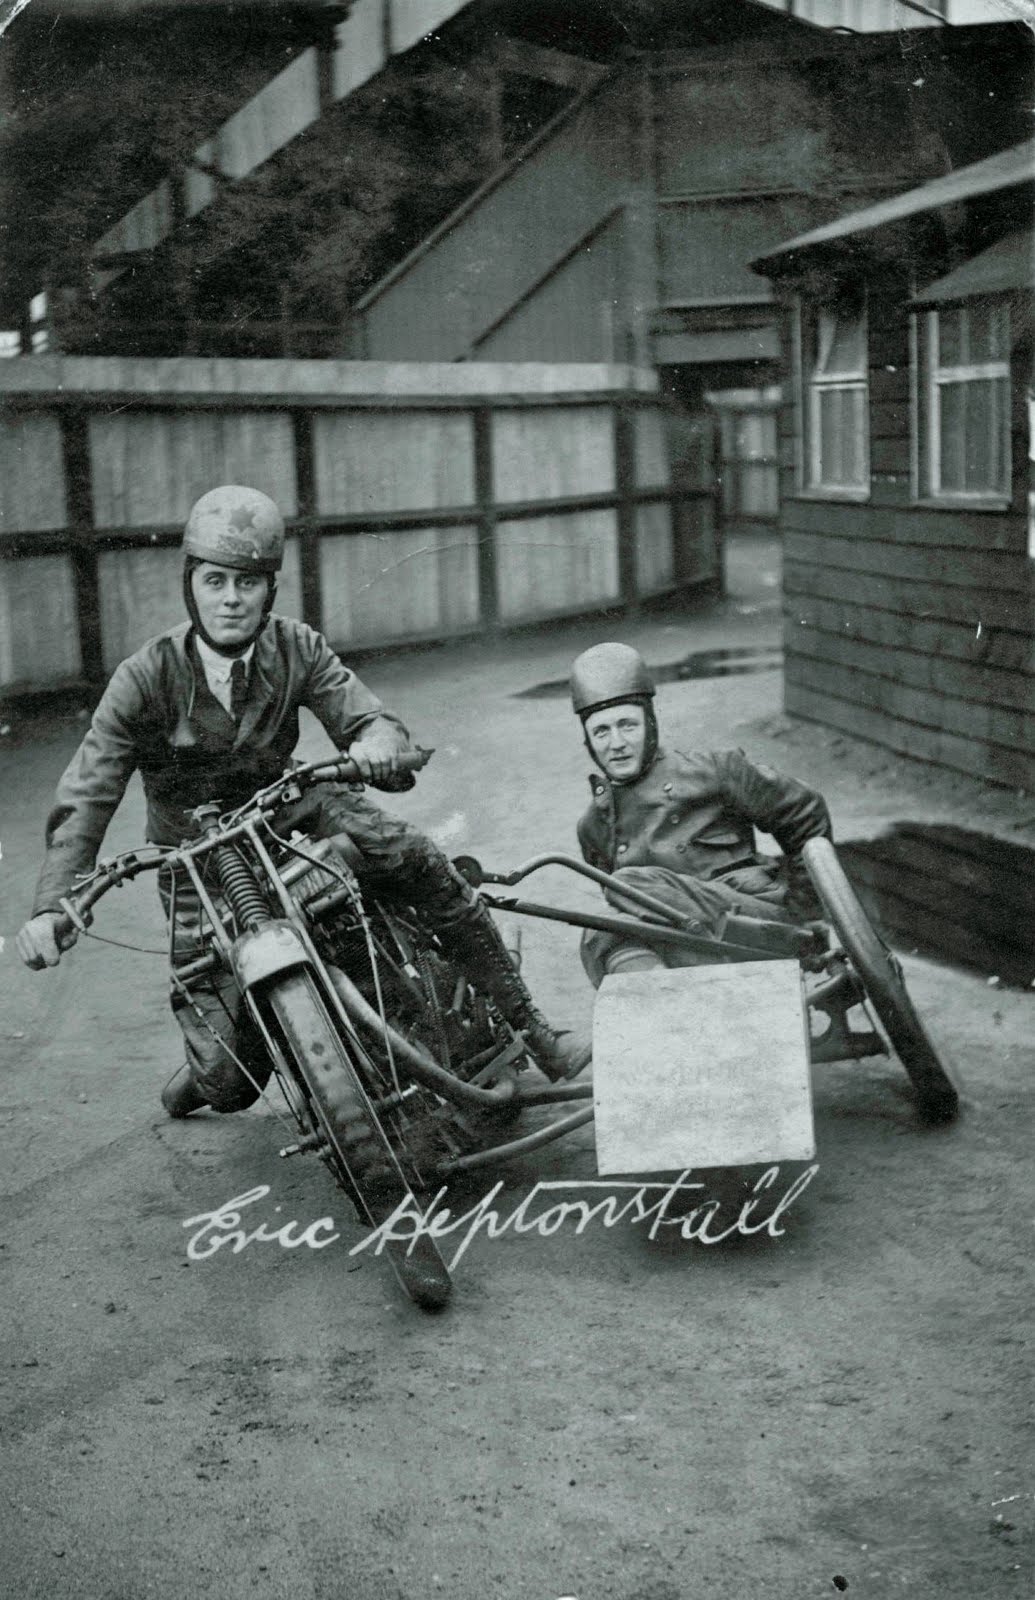 Eric_Heptonstall+-+motorcycle-74+blogspot+com.jpg